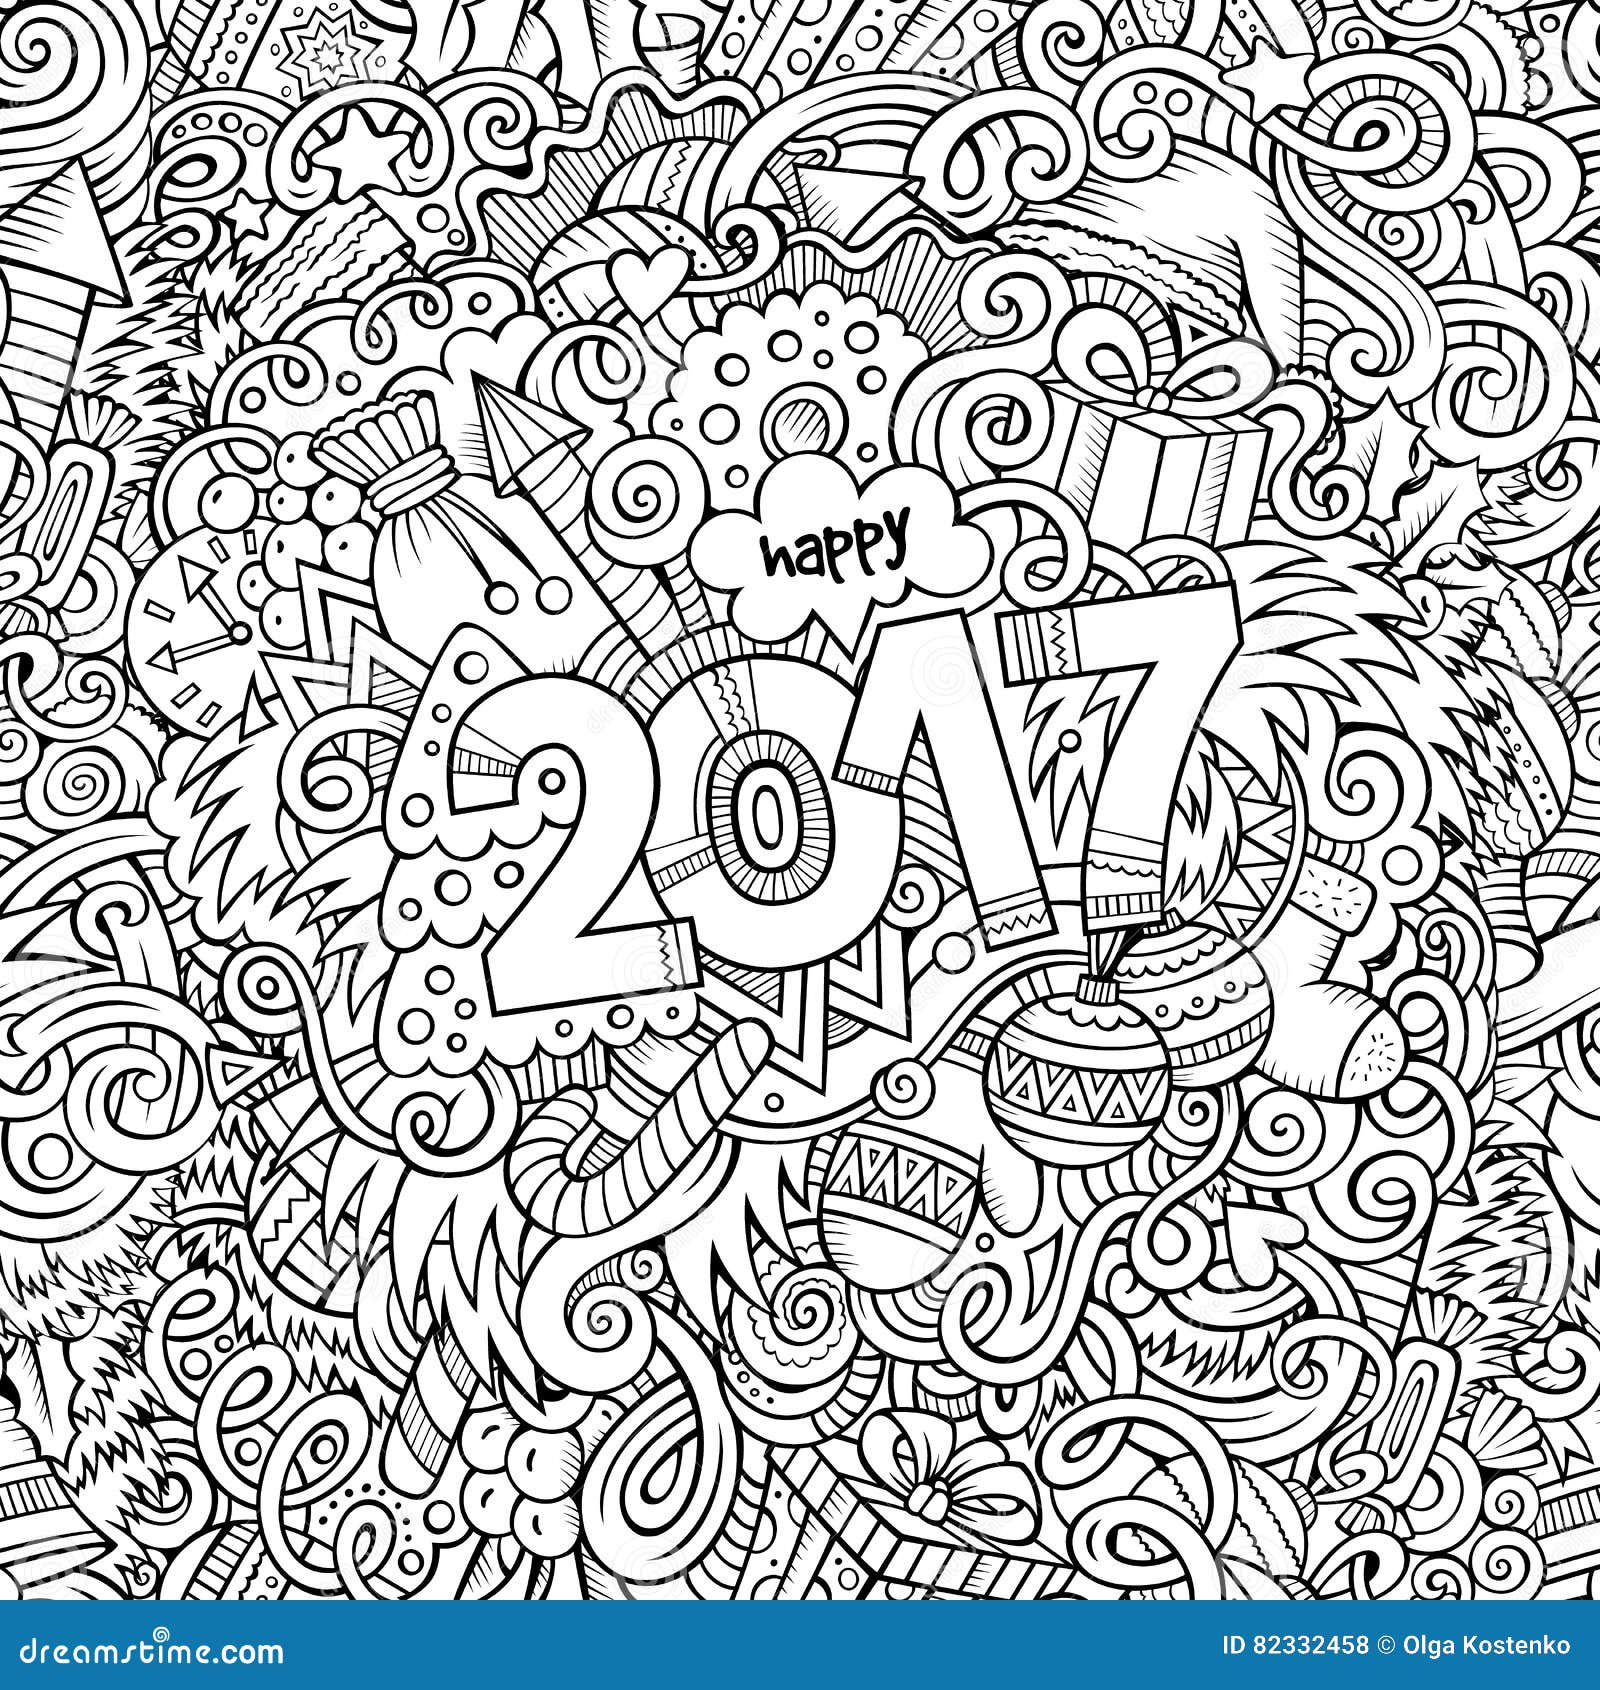 Cartoon Cute Doodles Hand Drawn New Year Illustration Stock ...